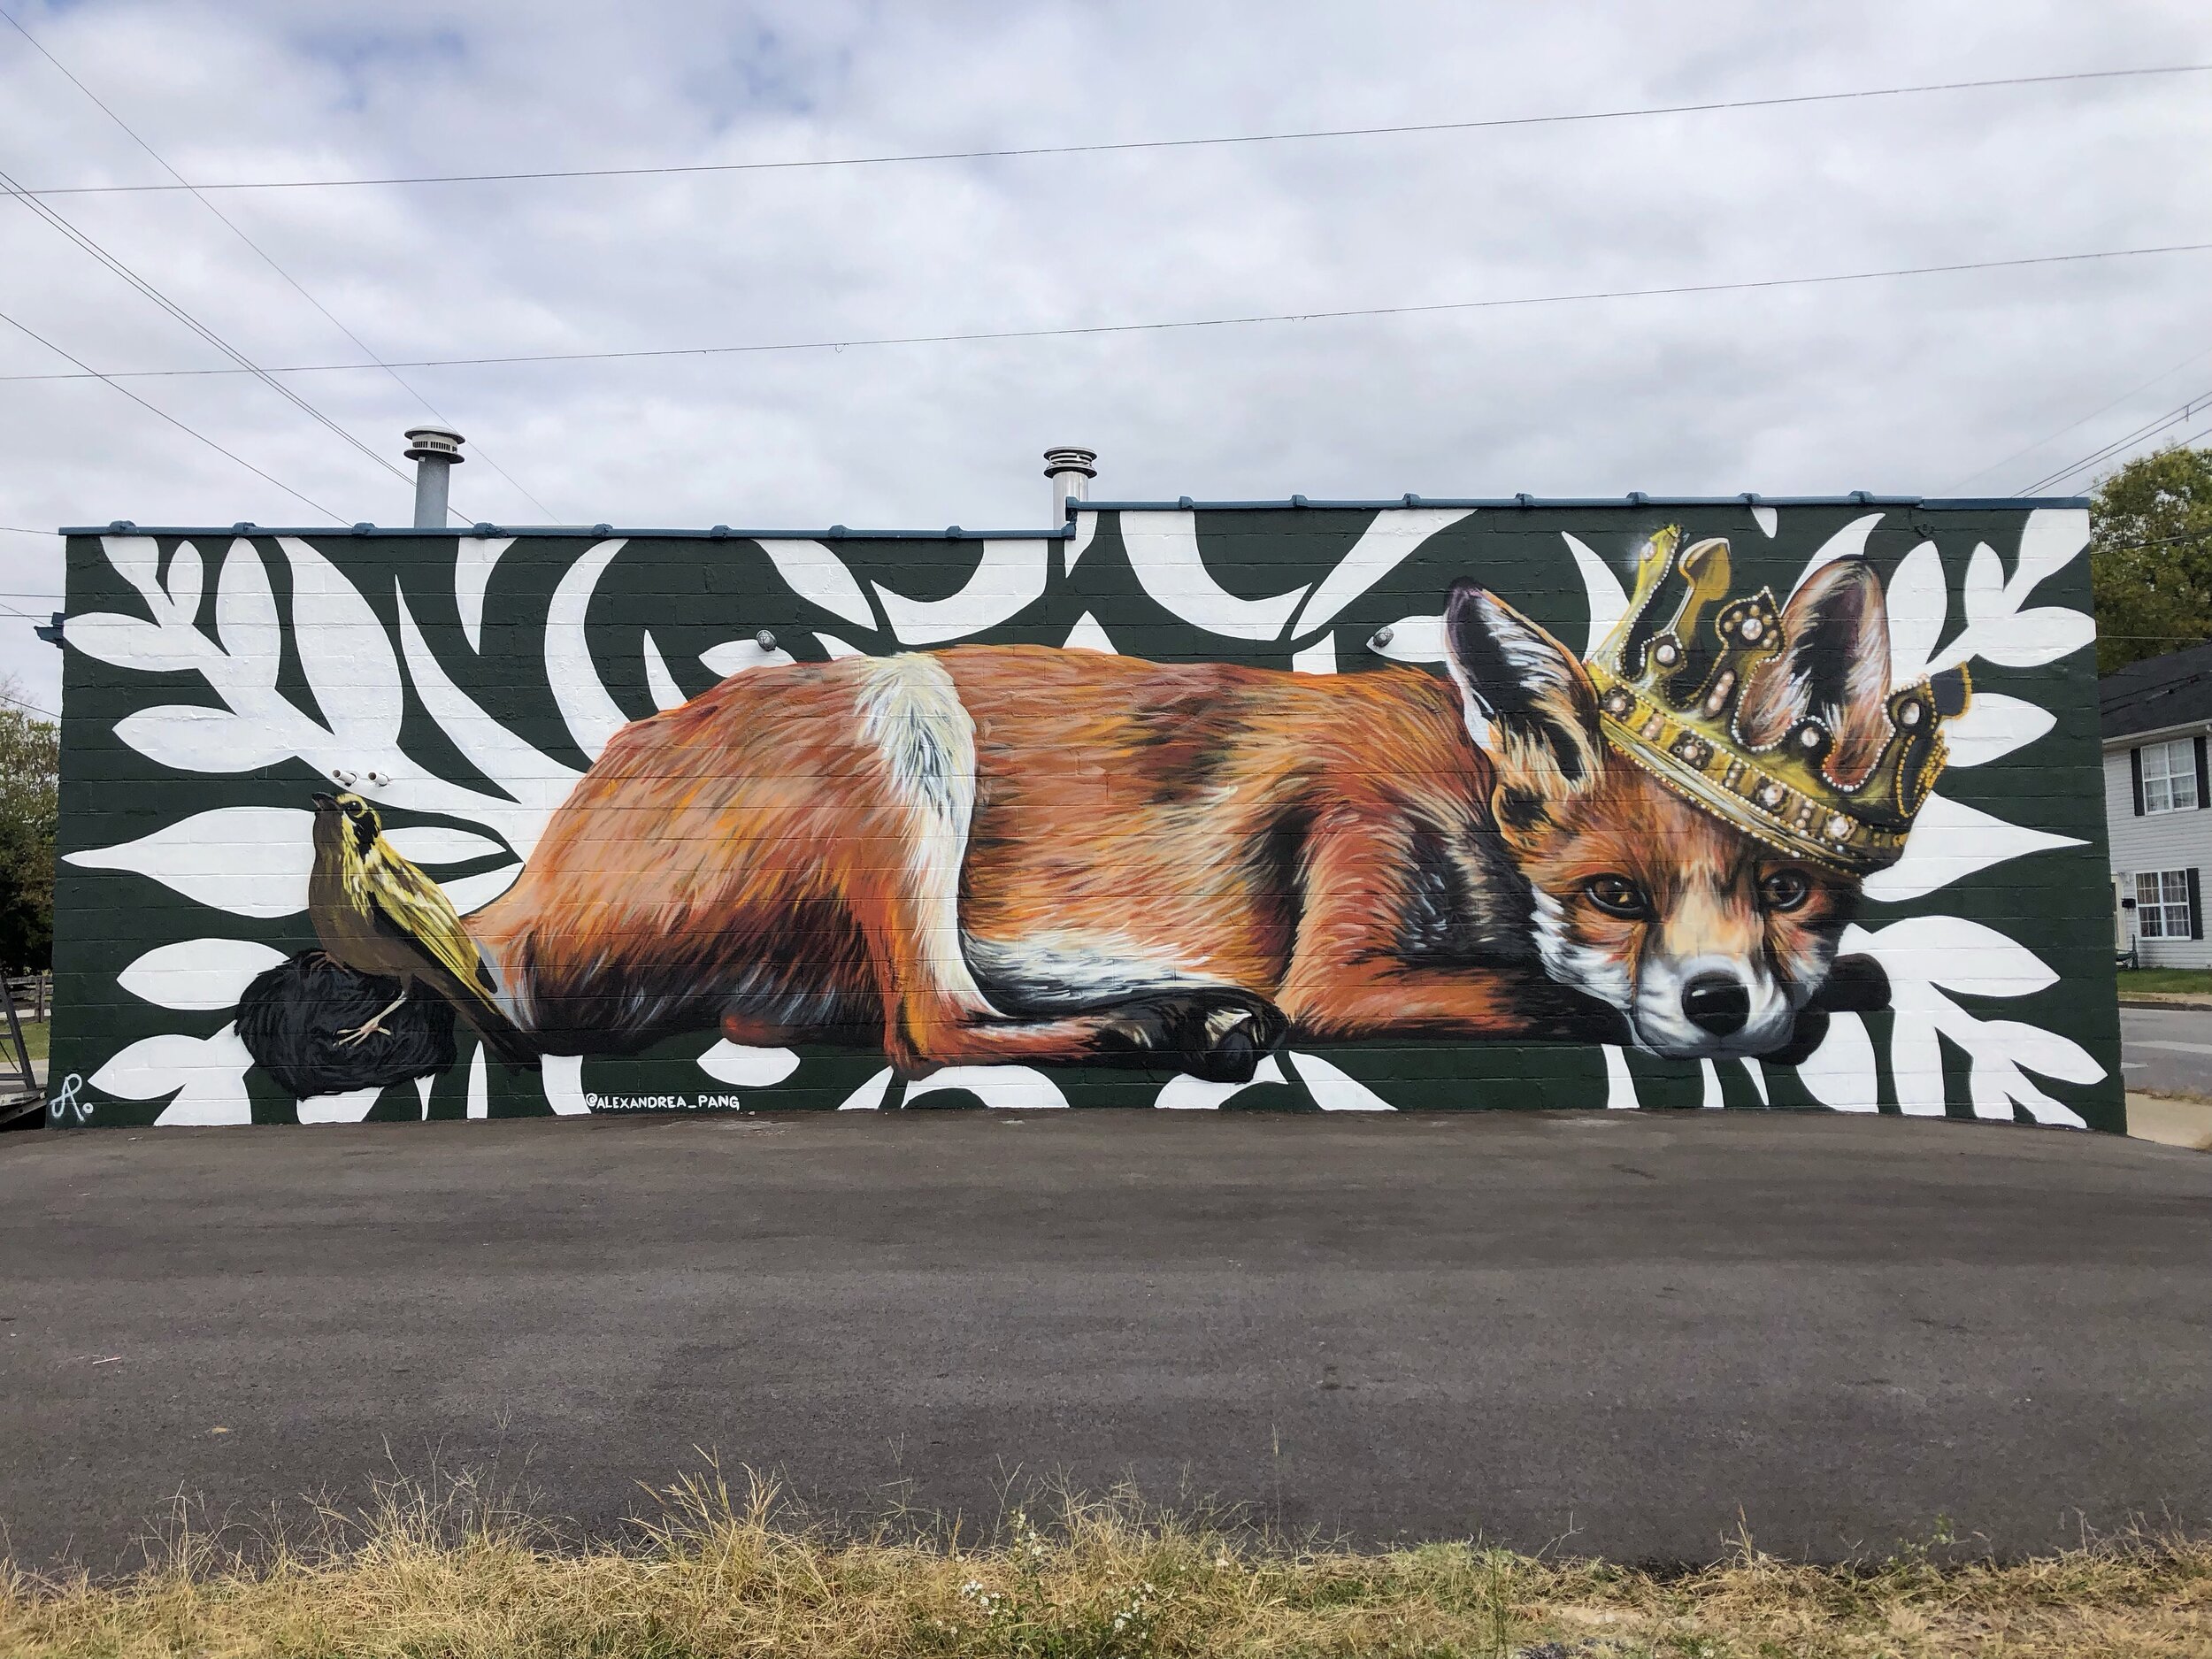 PRHBTN 2019 Mural. 5th + Jefferson St. Lexington, KY; October 2019